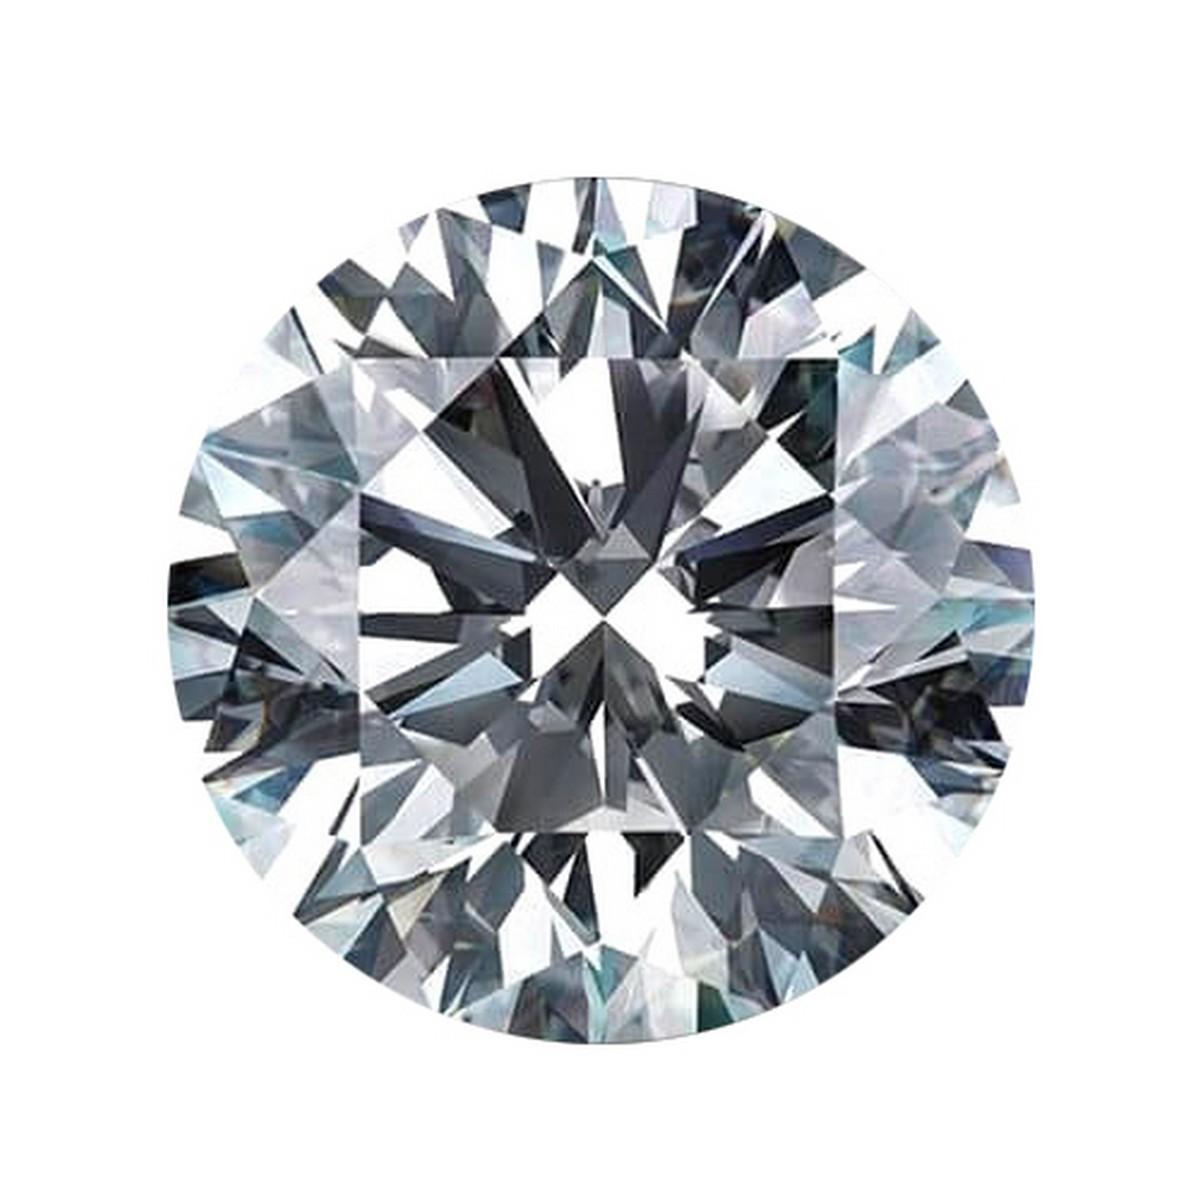 2.51 ctw. VVS2 IGI Certified Round Cut Loose Diamond (LAB GROWN)